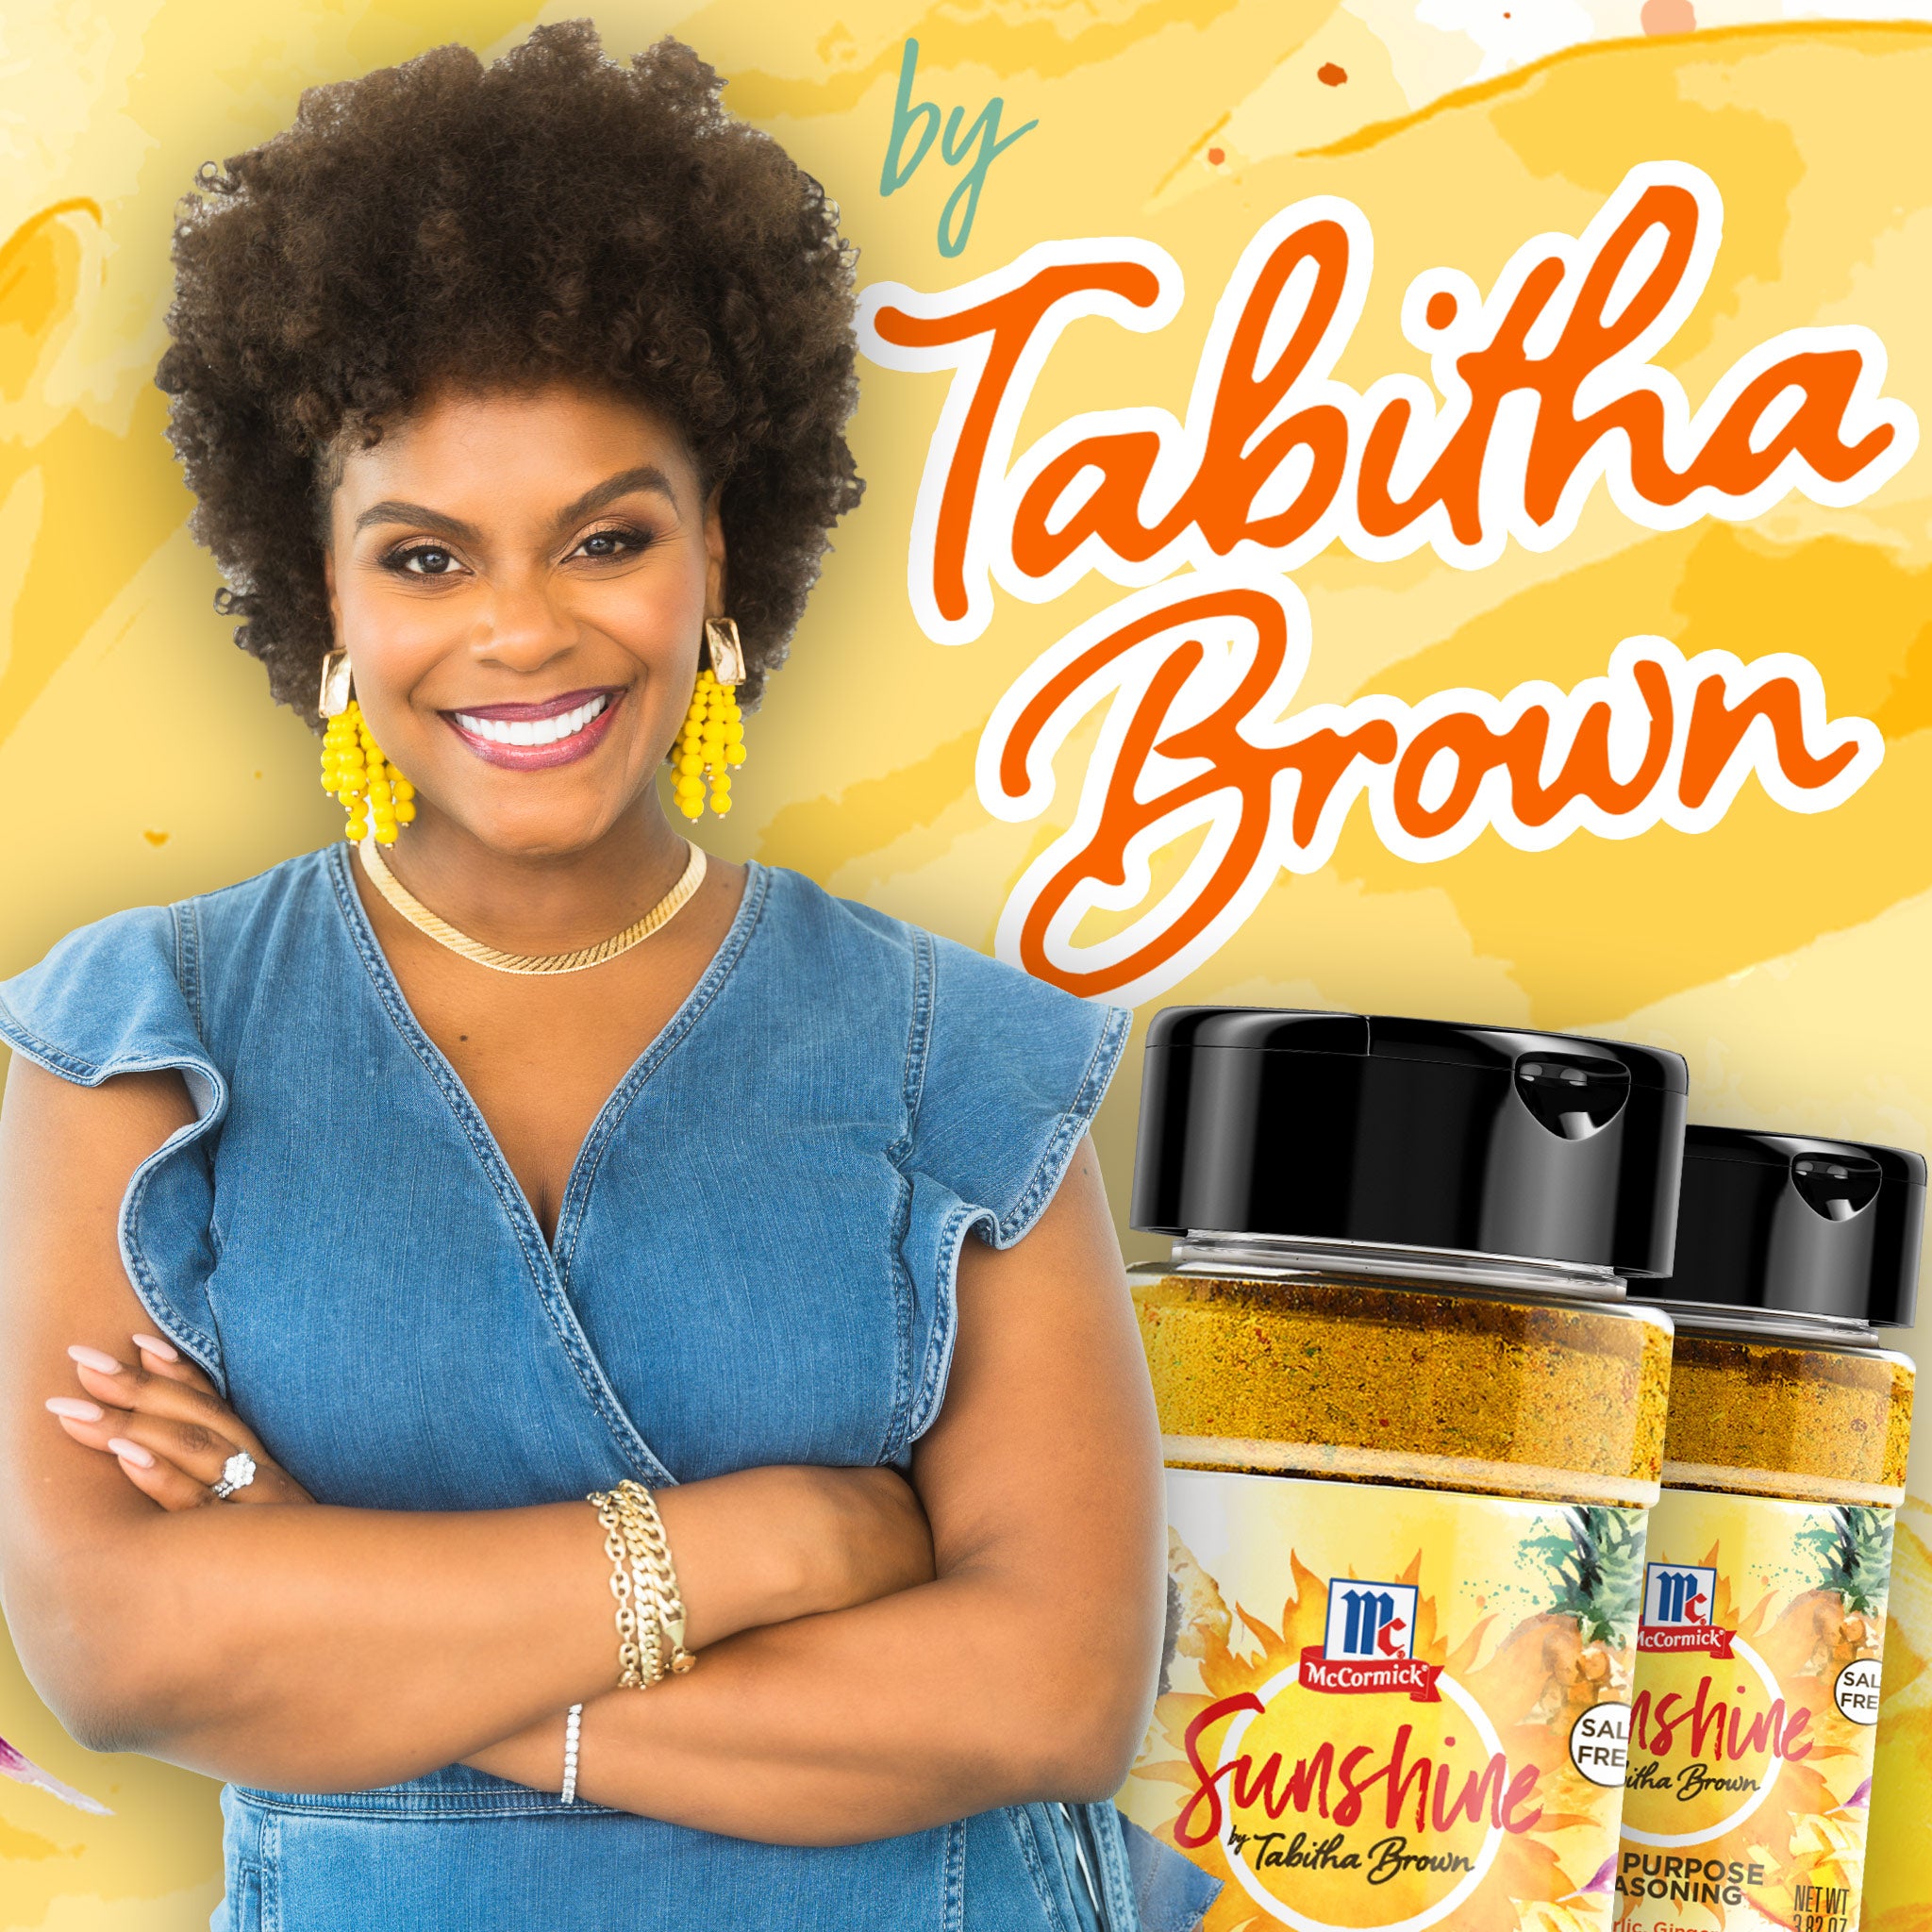 Where to Buy Tabitha Brown Seasonings